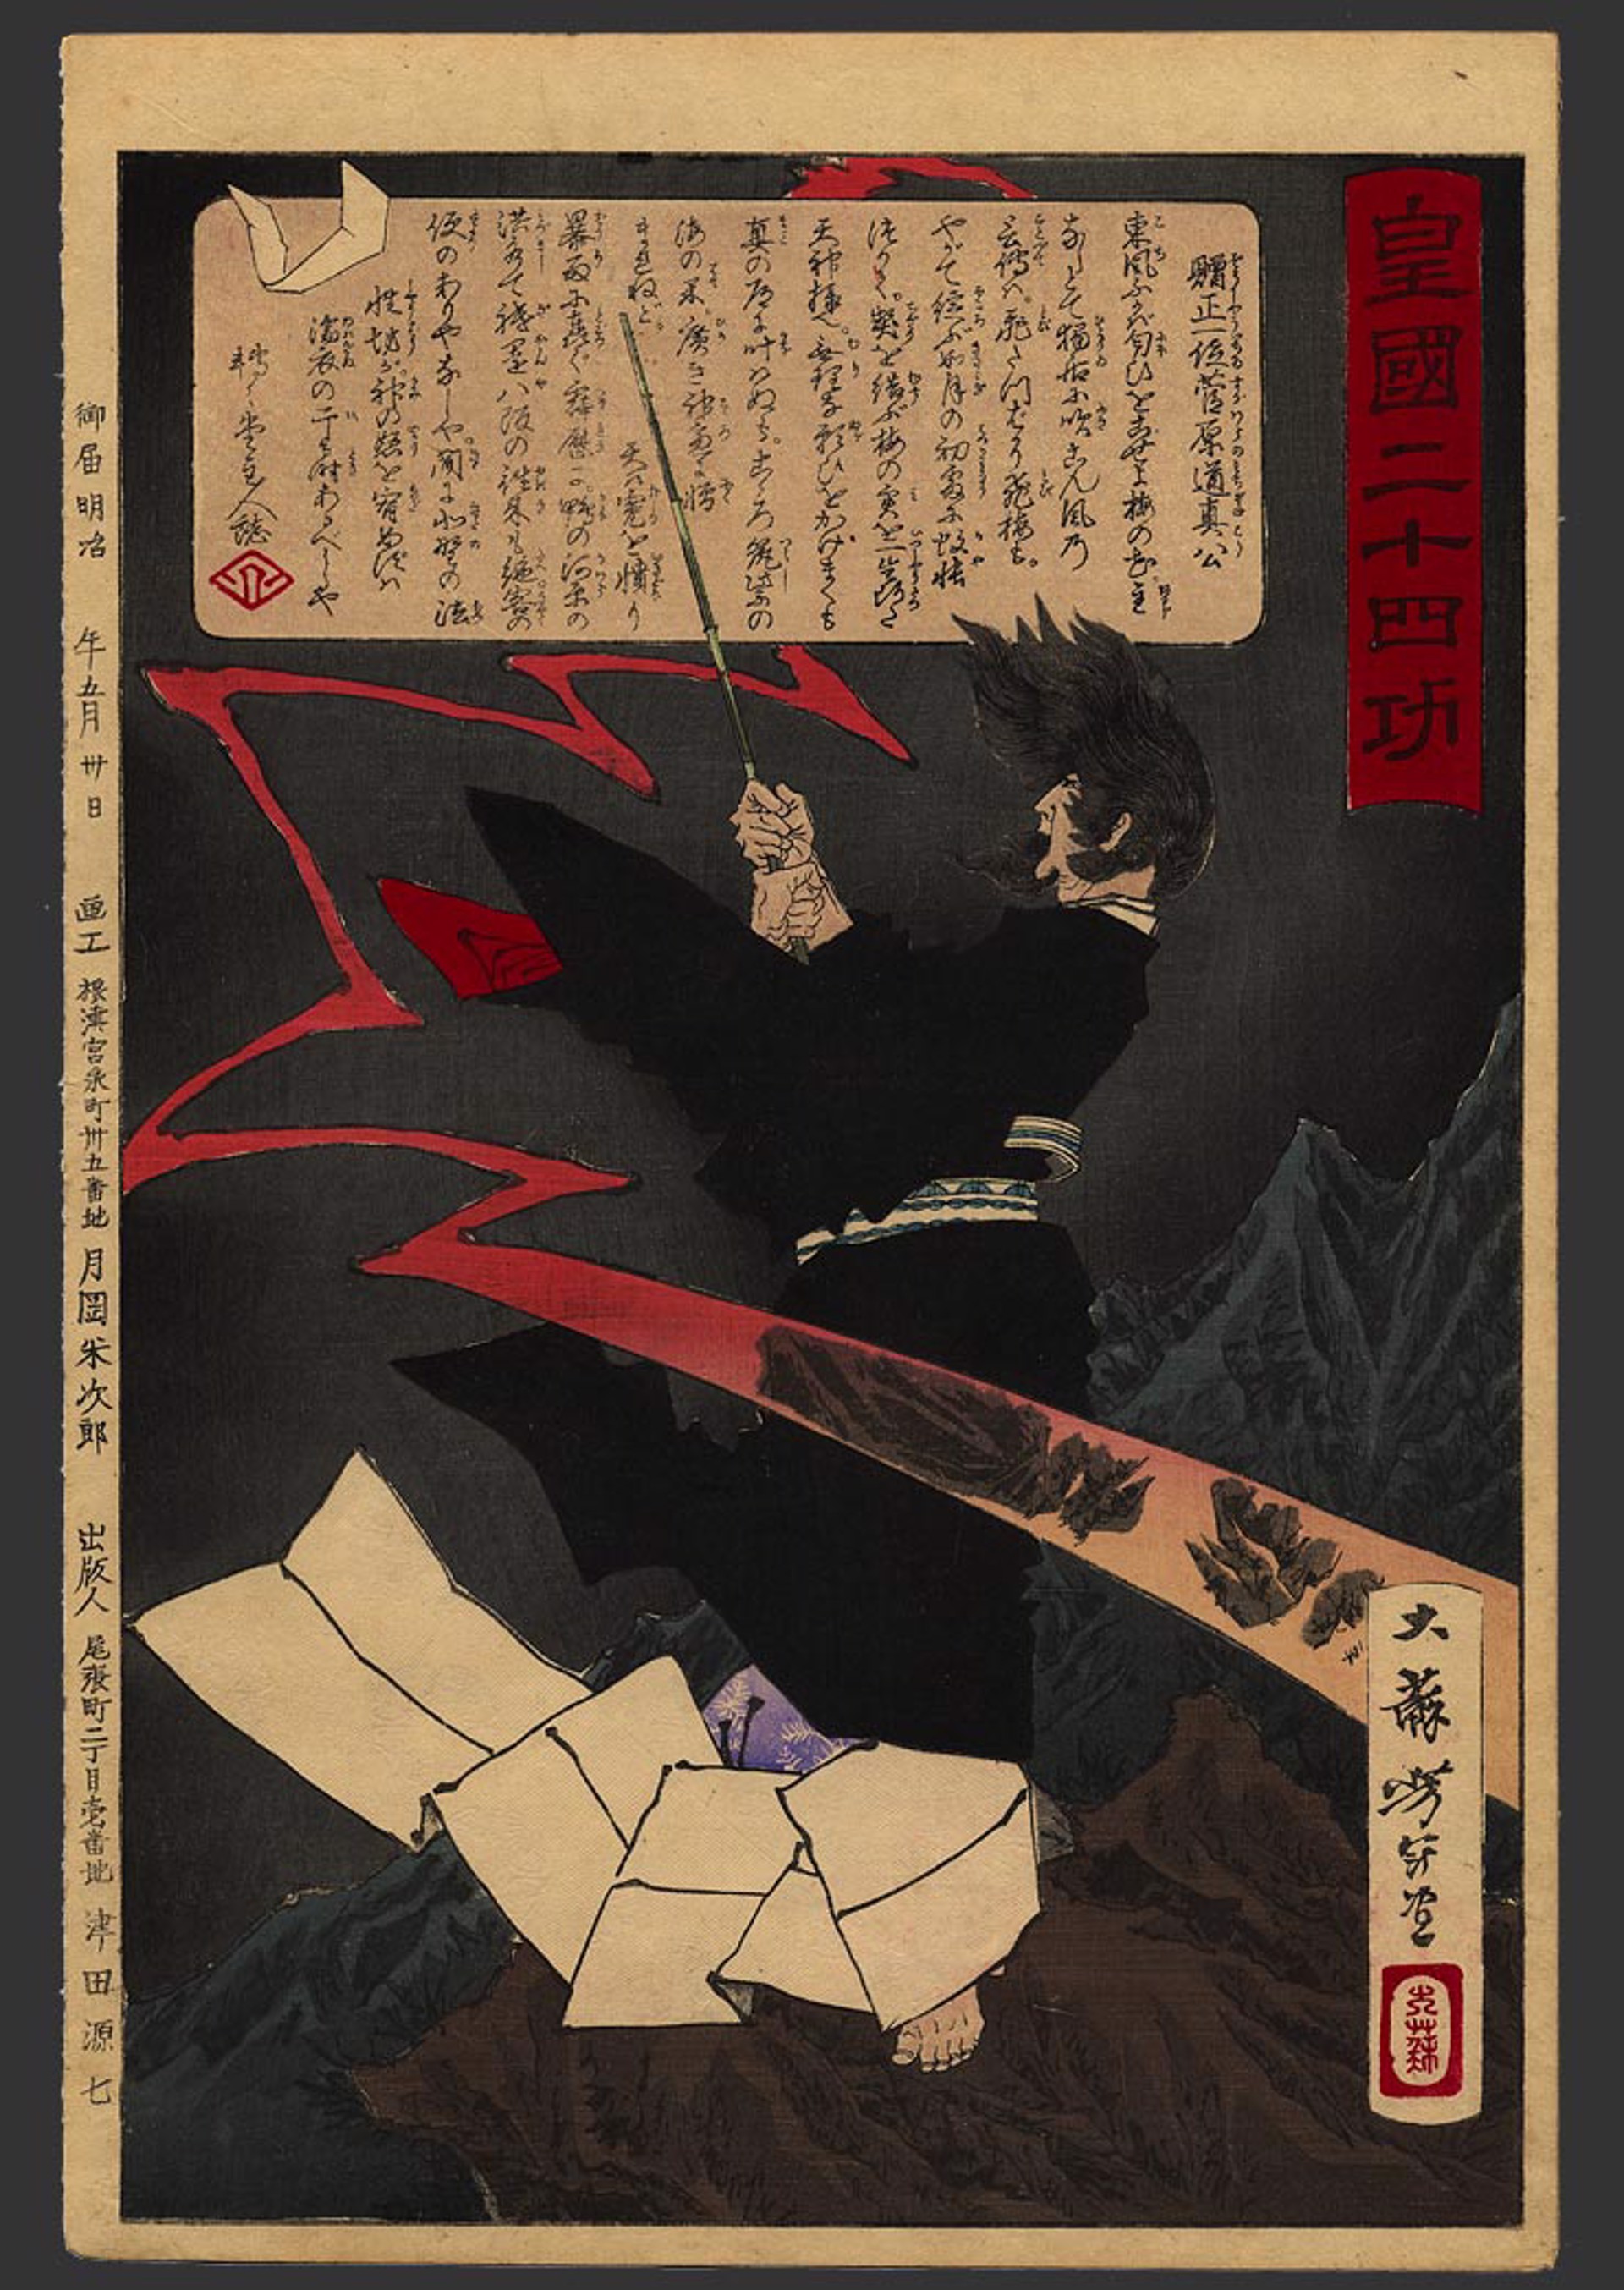 #2 Sugawara no Michizane (845 - 903) 24 Accomplishments in Imperial Japan by Yoshitoshi